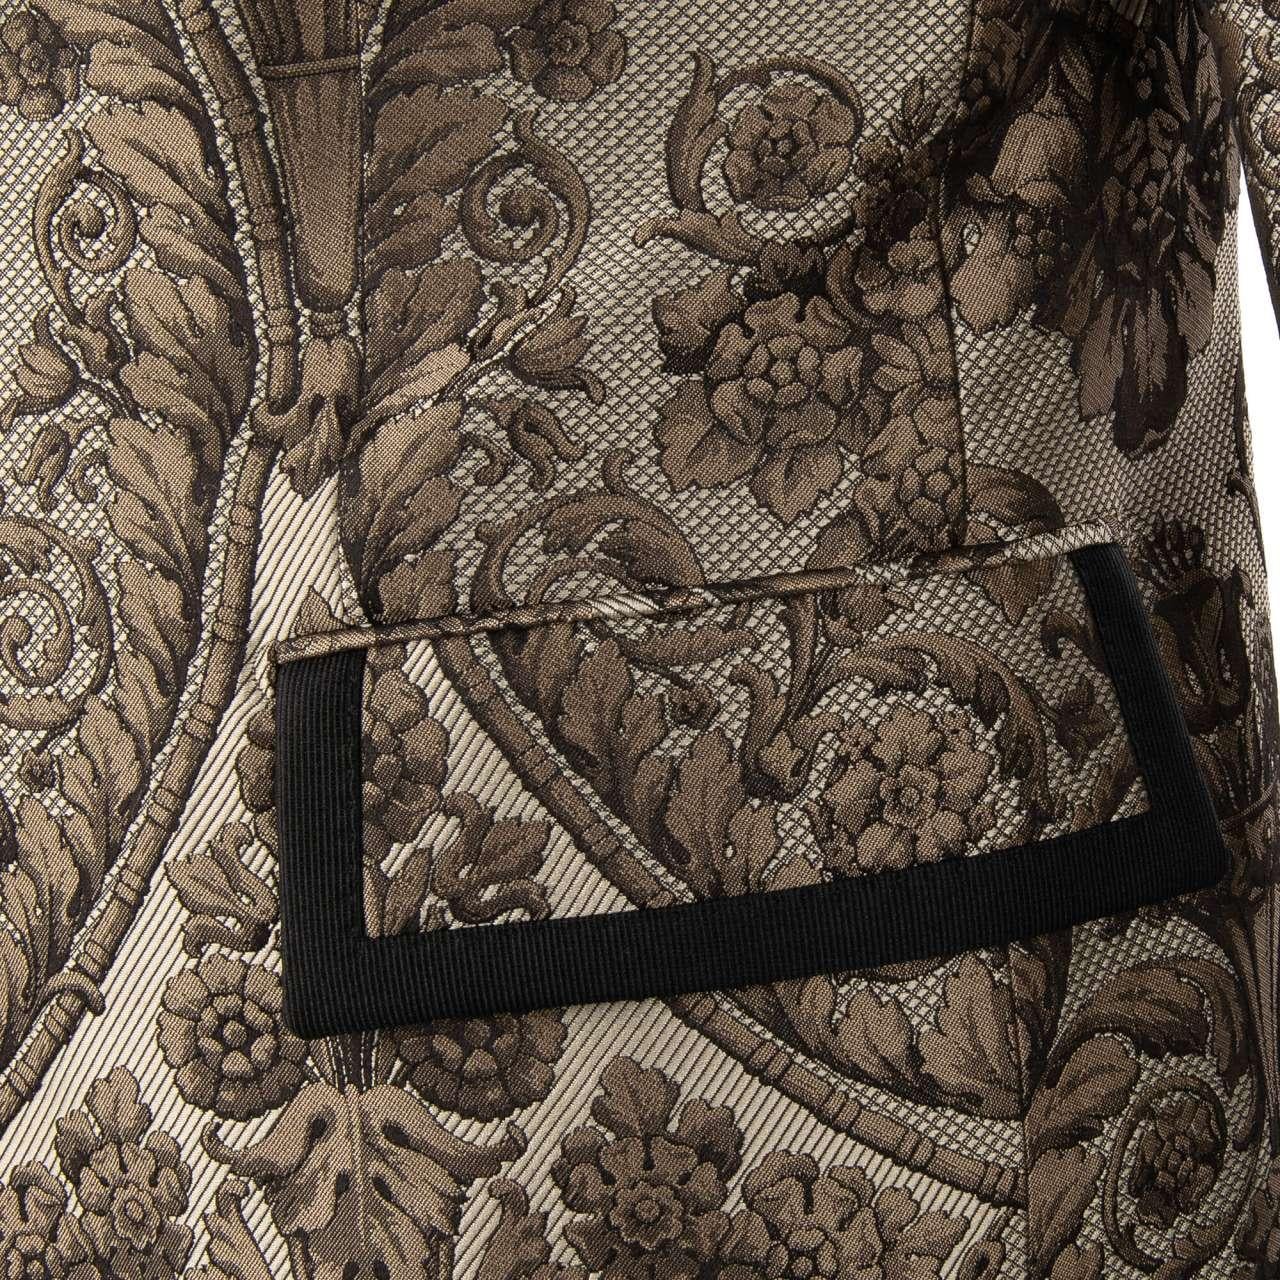 Men's Dolce & Gabbana Baroque Jacquard Blazer with Waistcoat Black Beige 50 US 40 M L For Sale